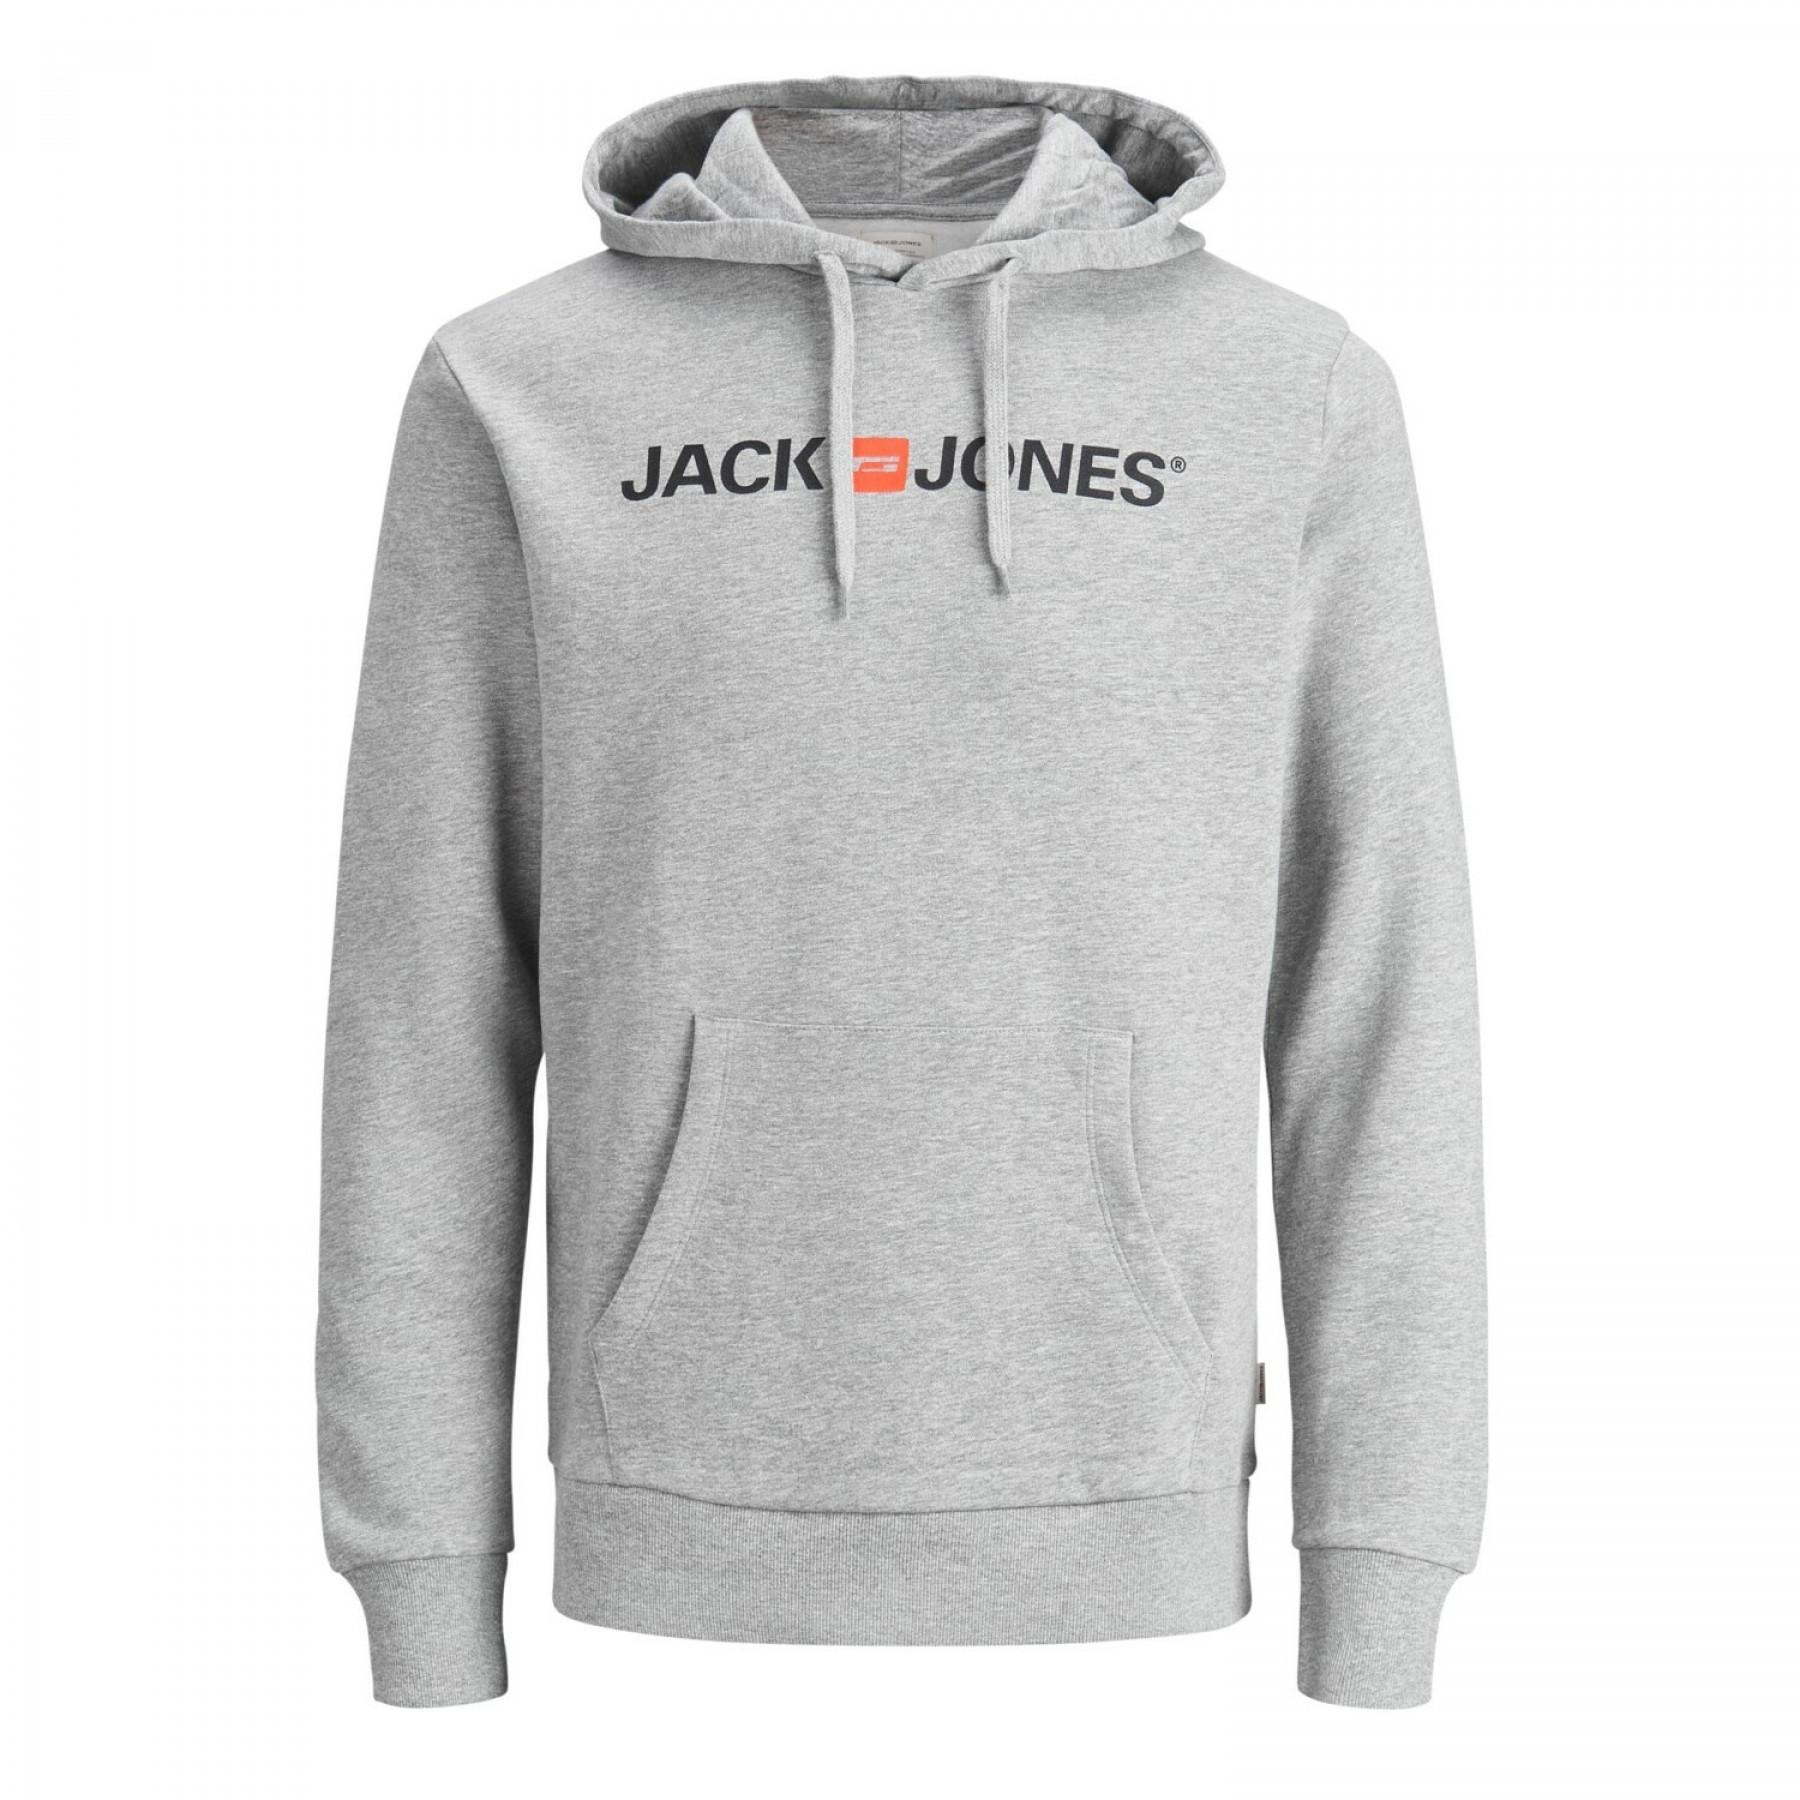 Sudadera con capucha Jack & Jones Corp old logo